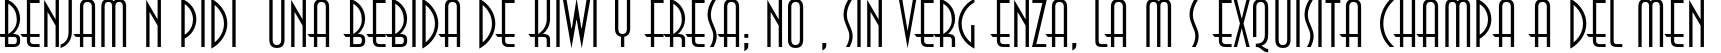 Пример написания шрифтом AnnaLightC текста на испанском